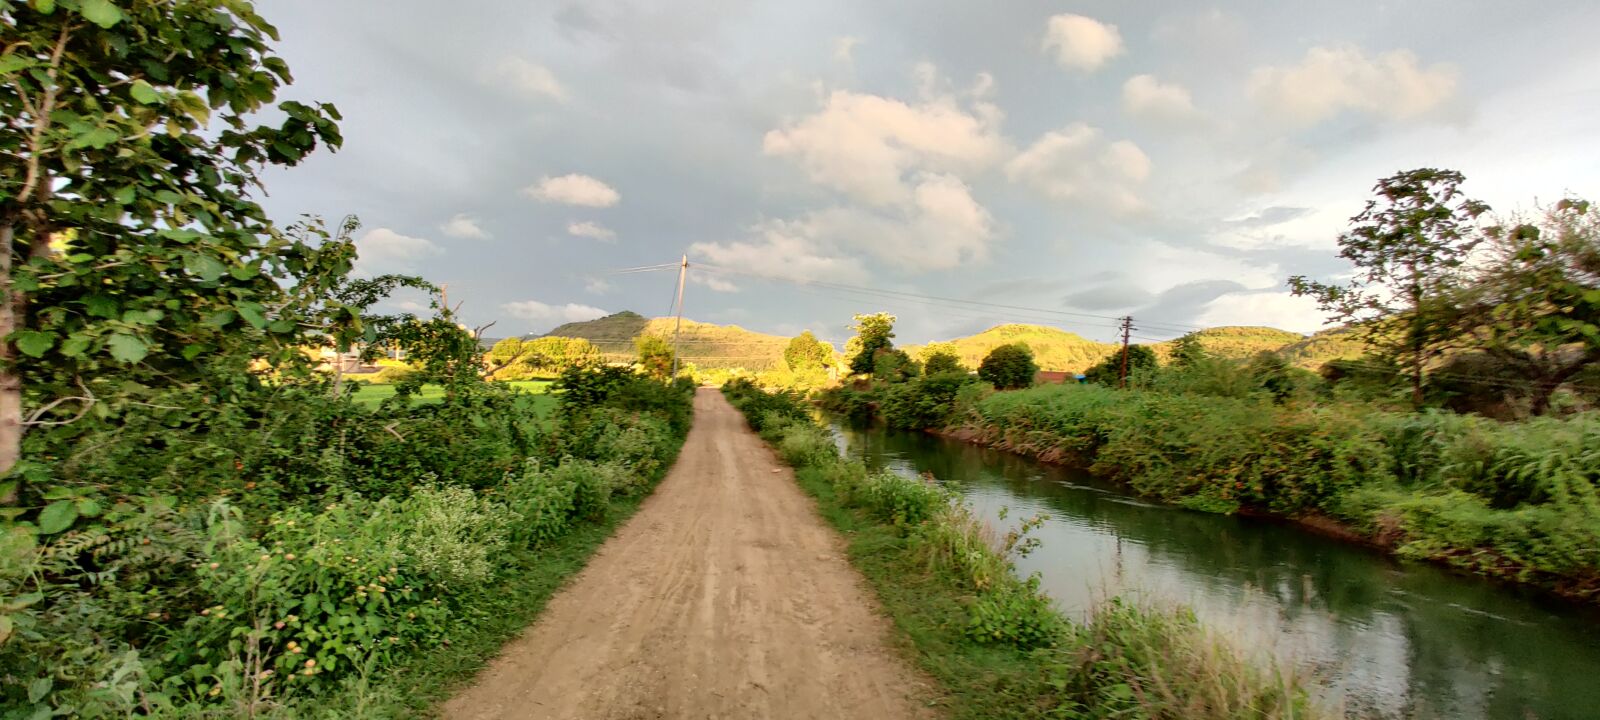 OnePlus HD1901 sample photo. Nature, road, greener photography